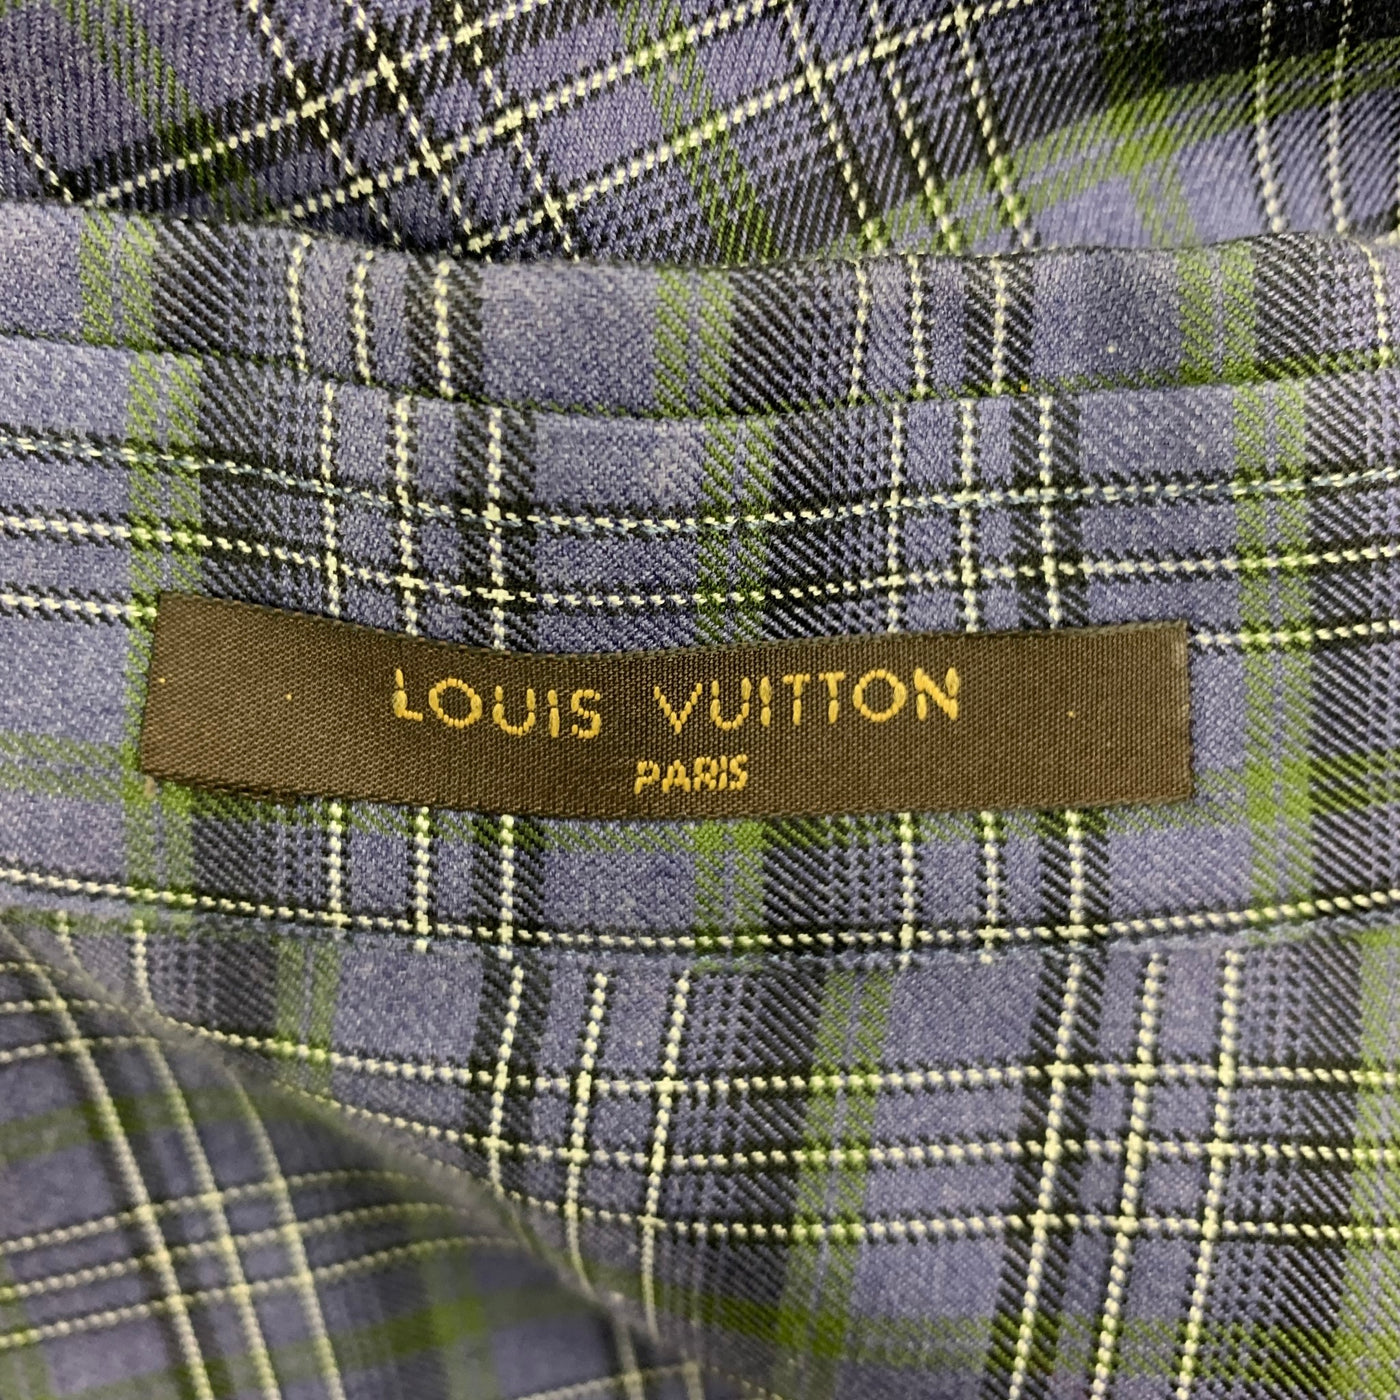 LOUIS VUITTON Size XL Purple Black Green Plaid Cotton Long Sleeve